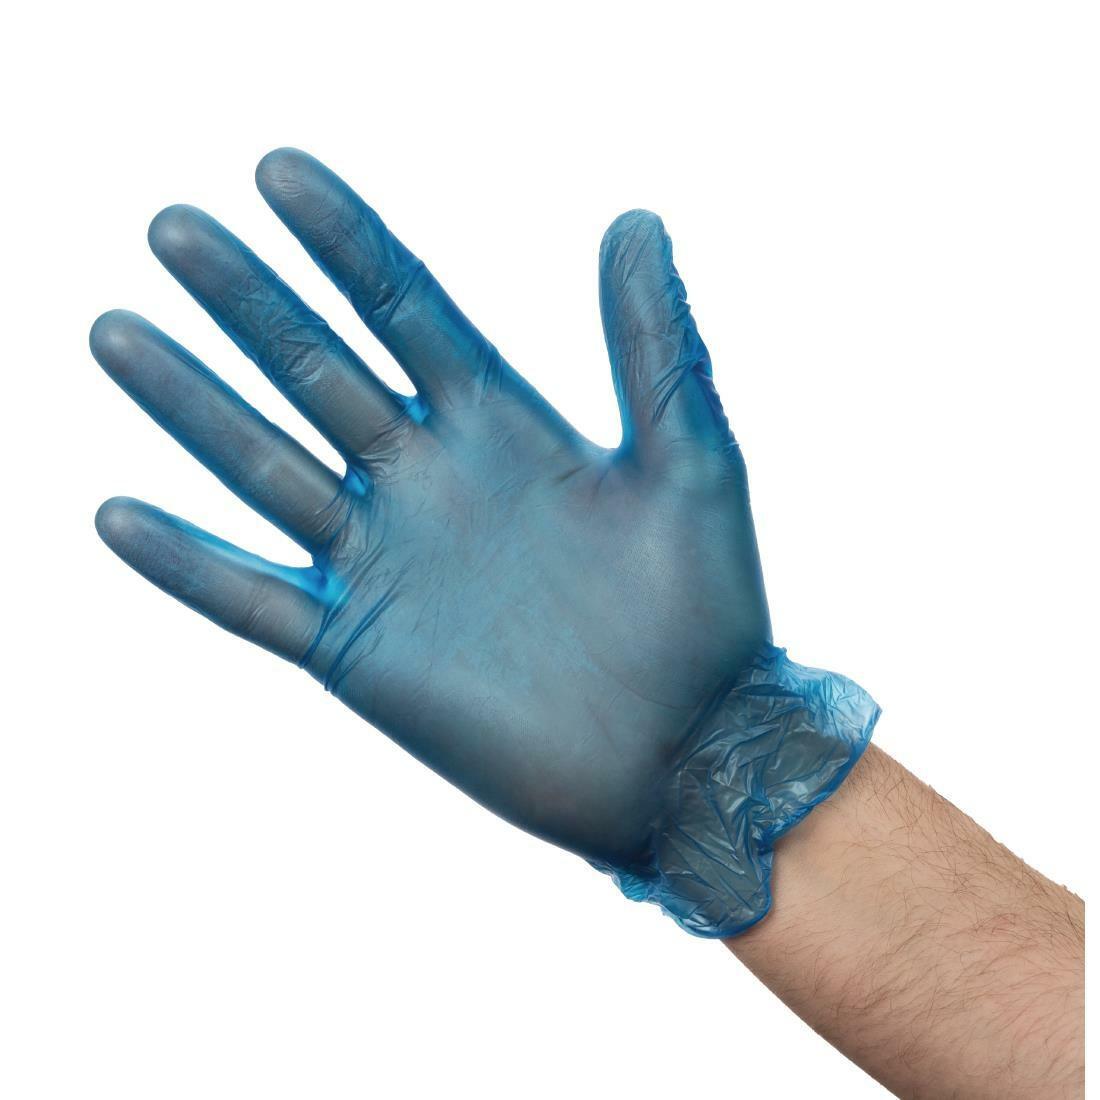 Matfer 262290 Sugar Work Gloves Medium